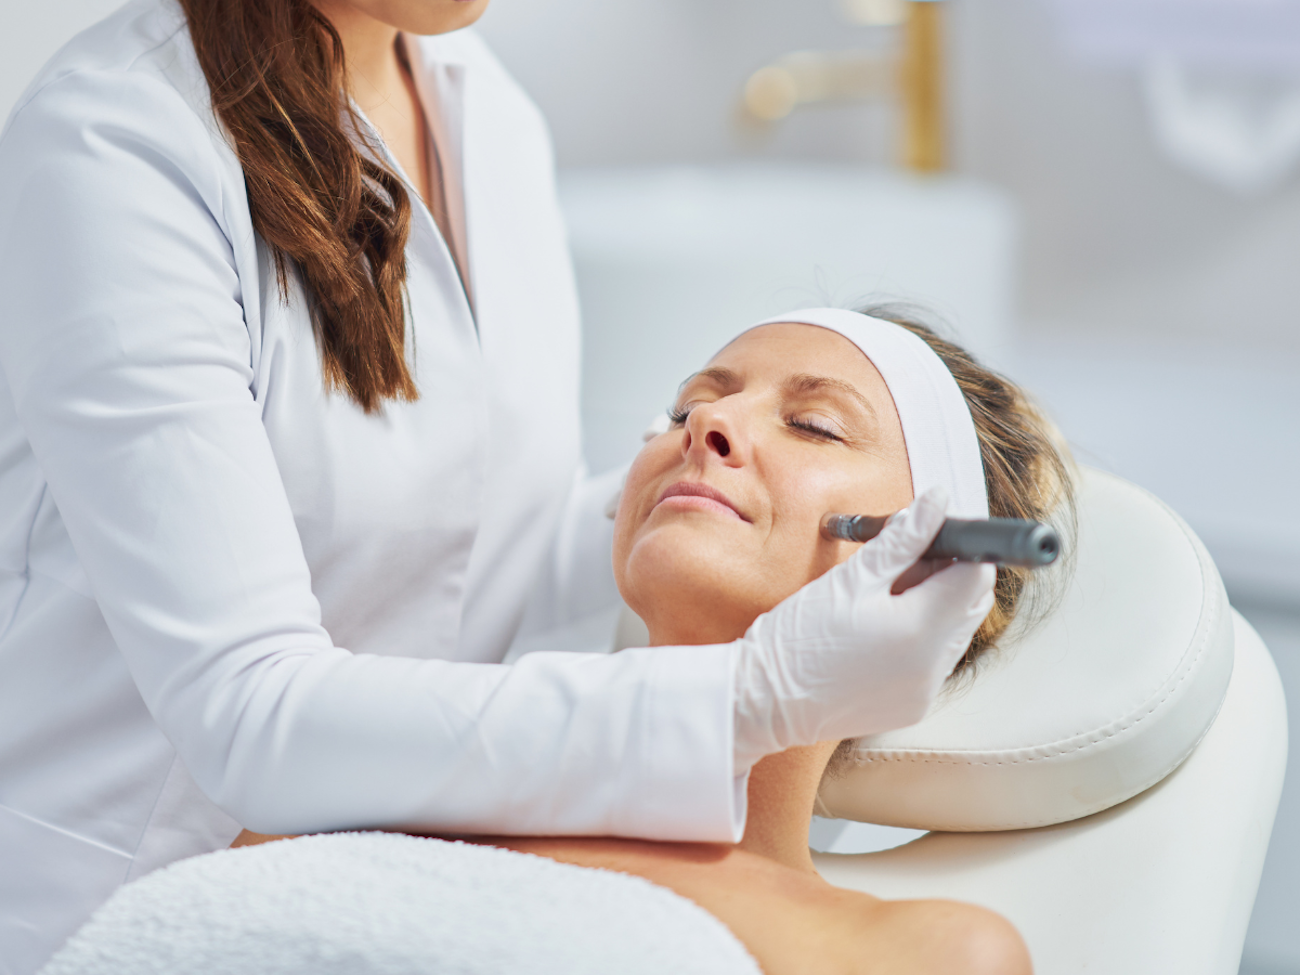 Dermatological Treatments for Enlarged Pores